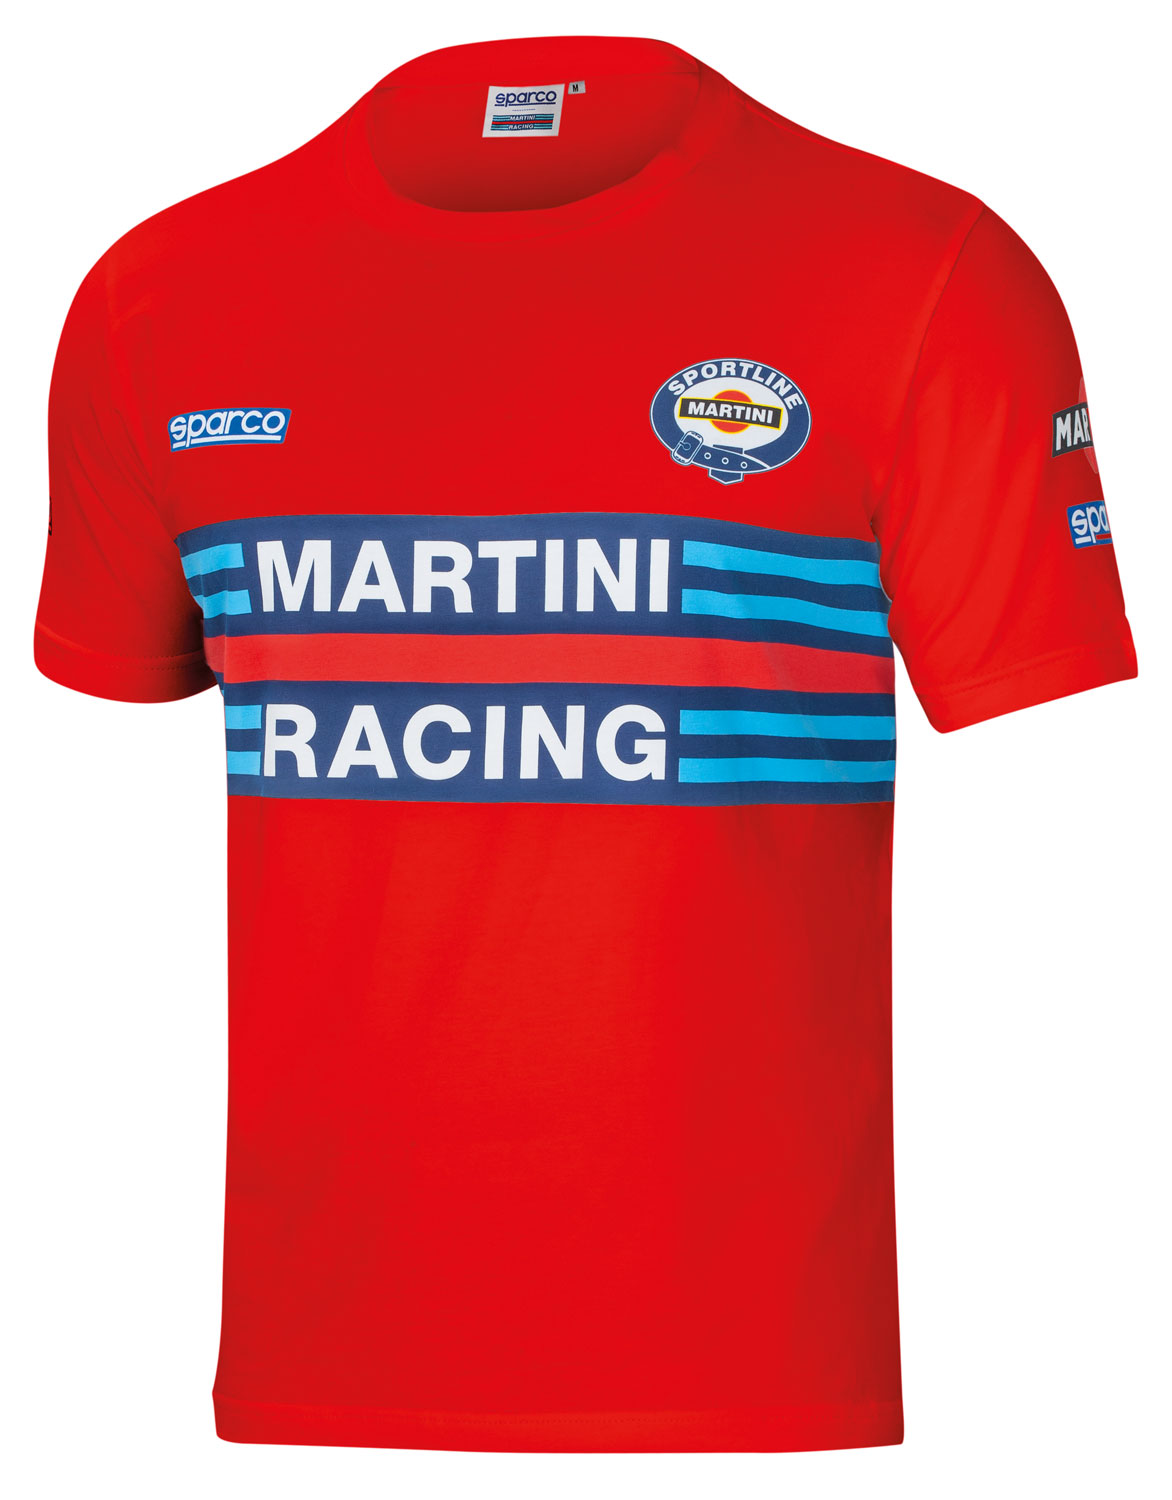 Sparco T-Shirt Martini Racing, rot